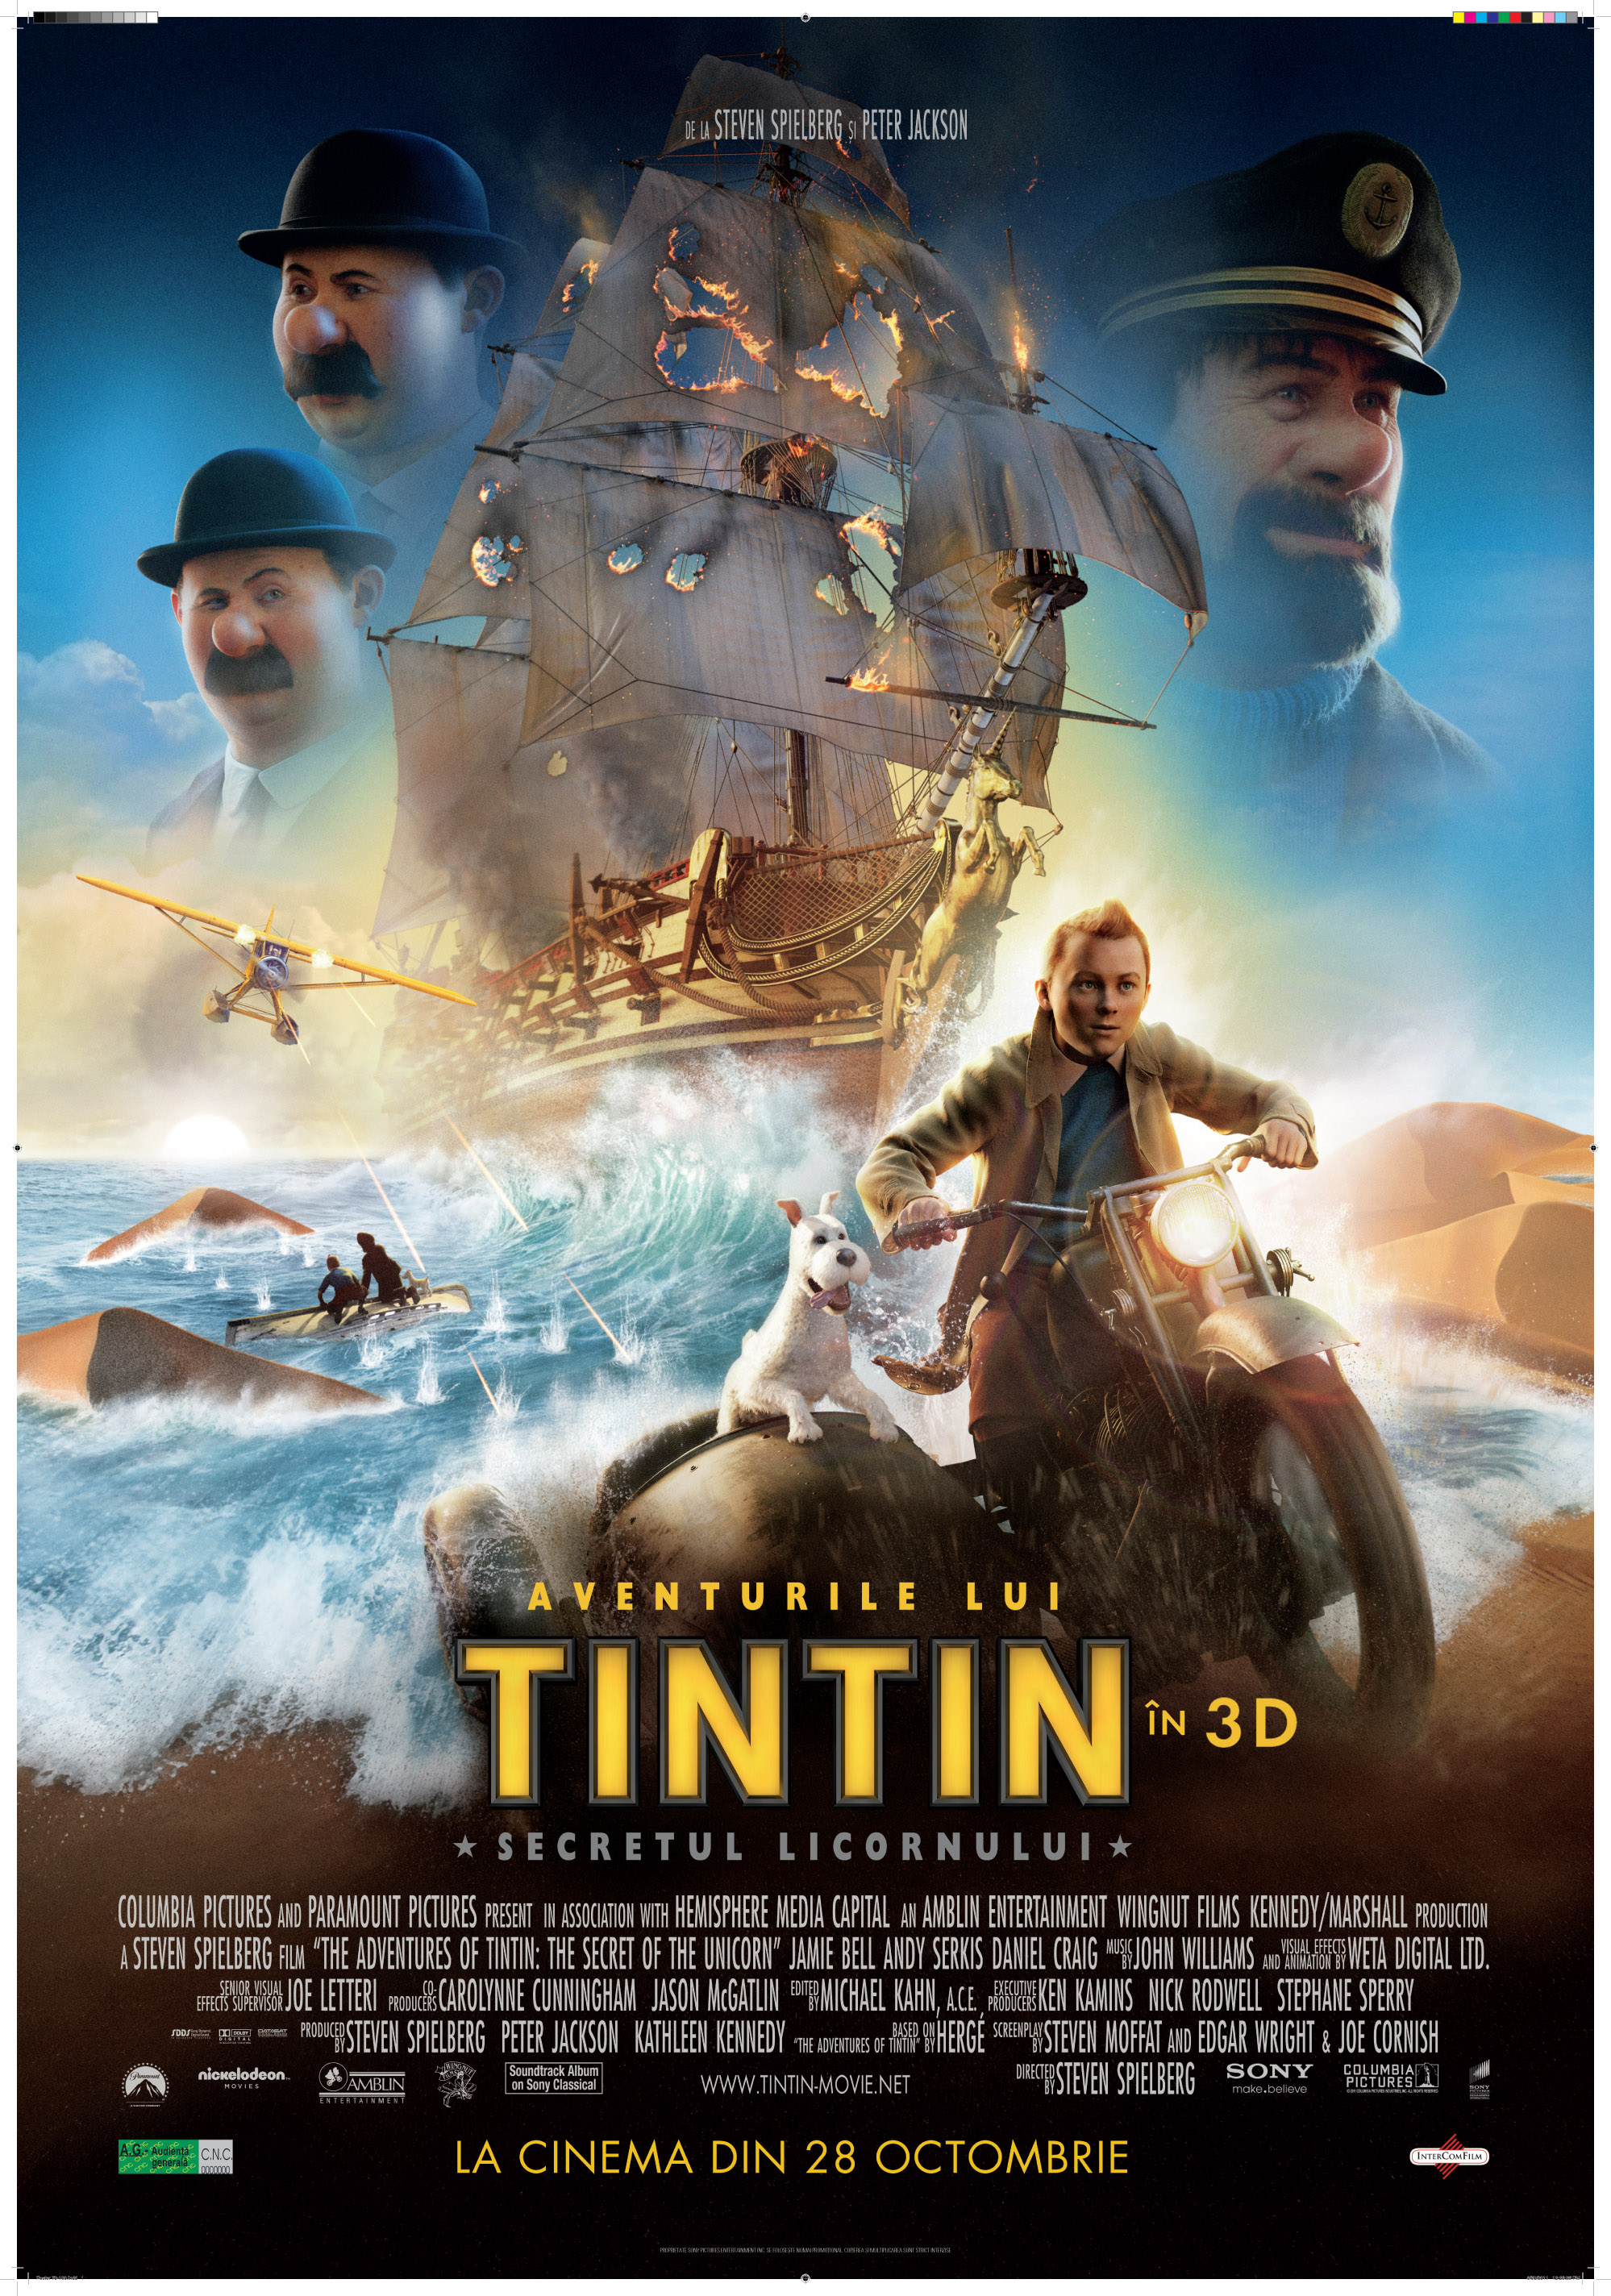 Te trimit la Aventurile lui TinTin in 3D la IMAX Cotroceni